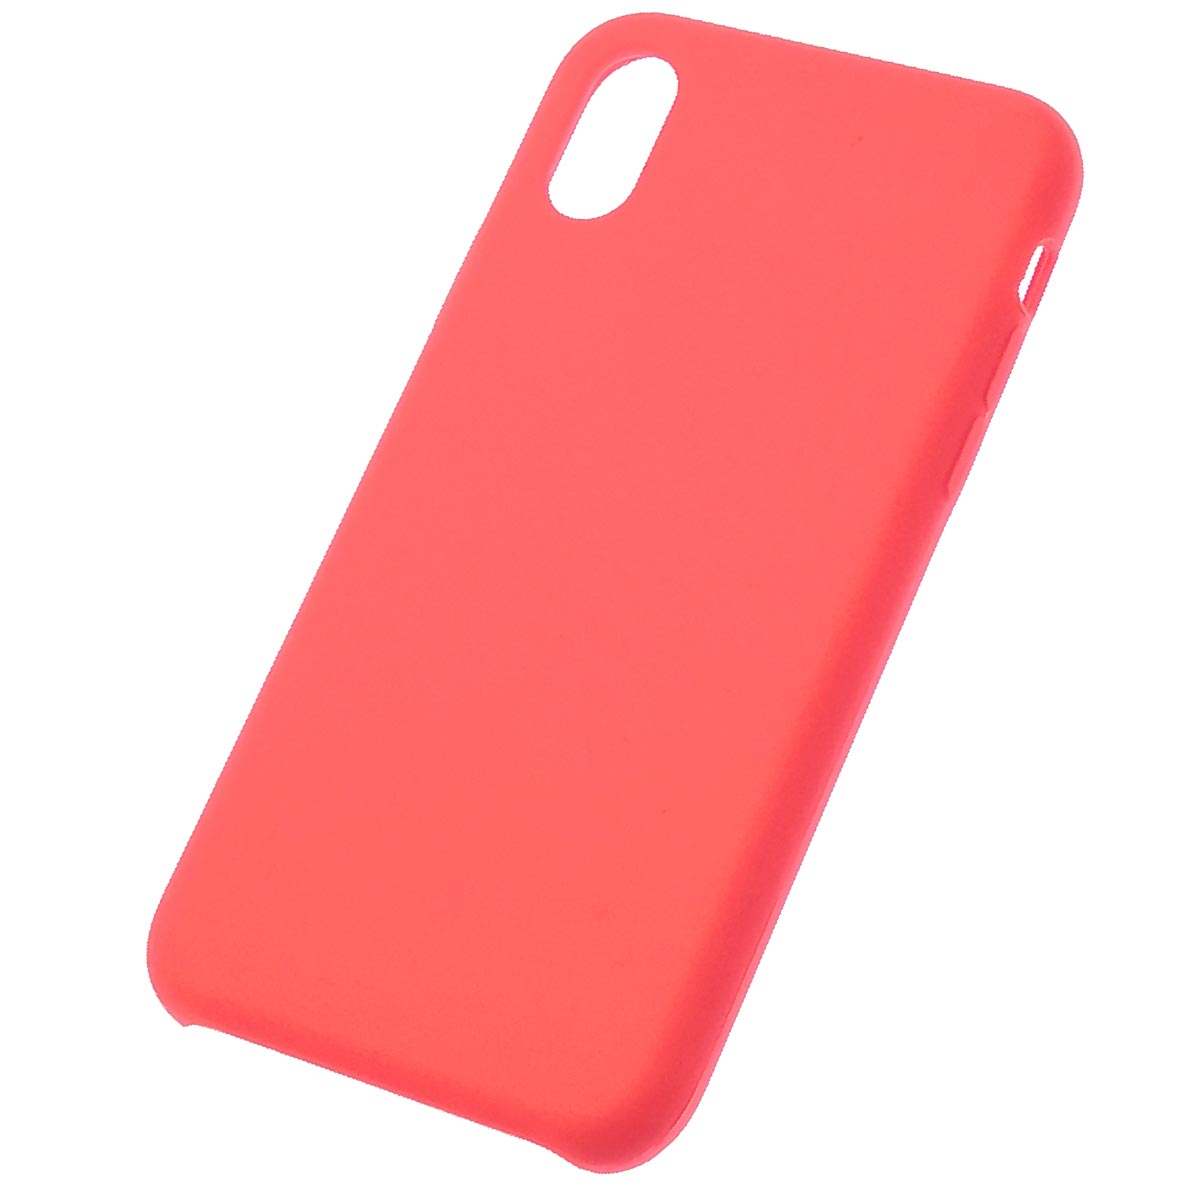 Чехол накладка Silicon Case для APPLE iPhone X, iPhone XS, силикон, бархат, цвет коралловый